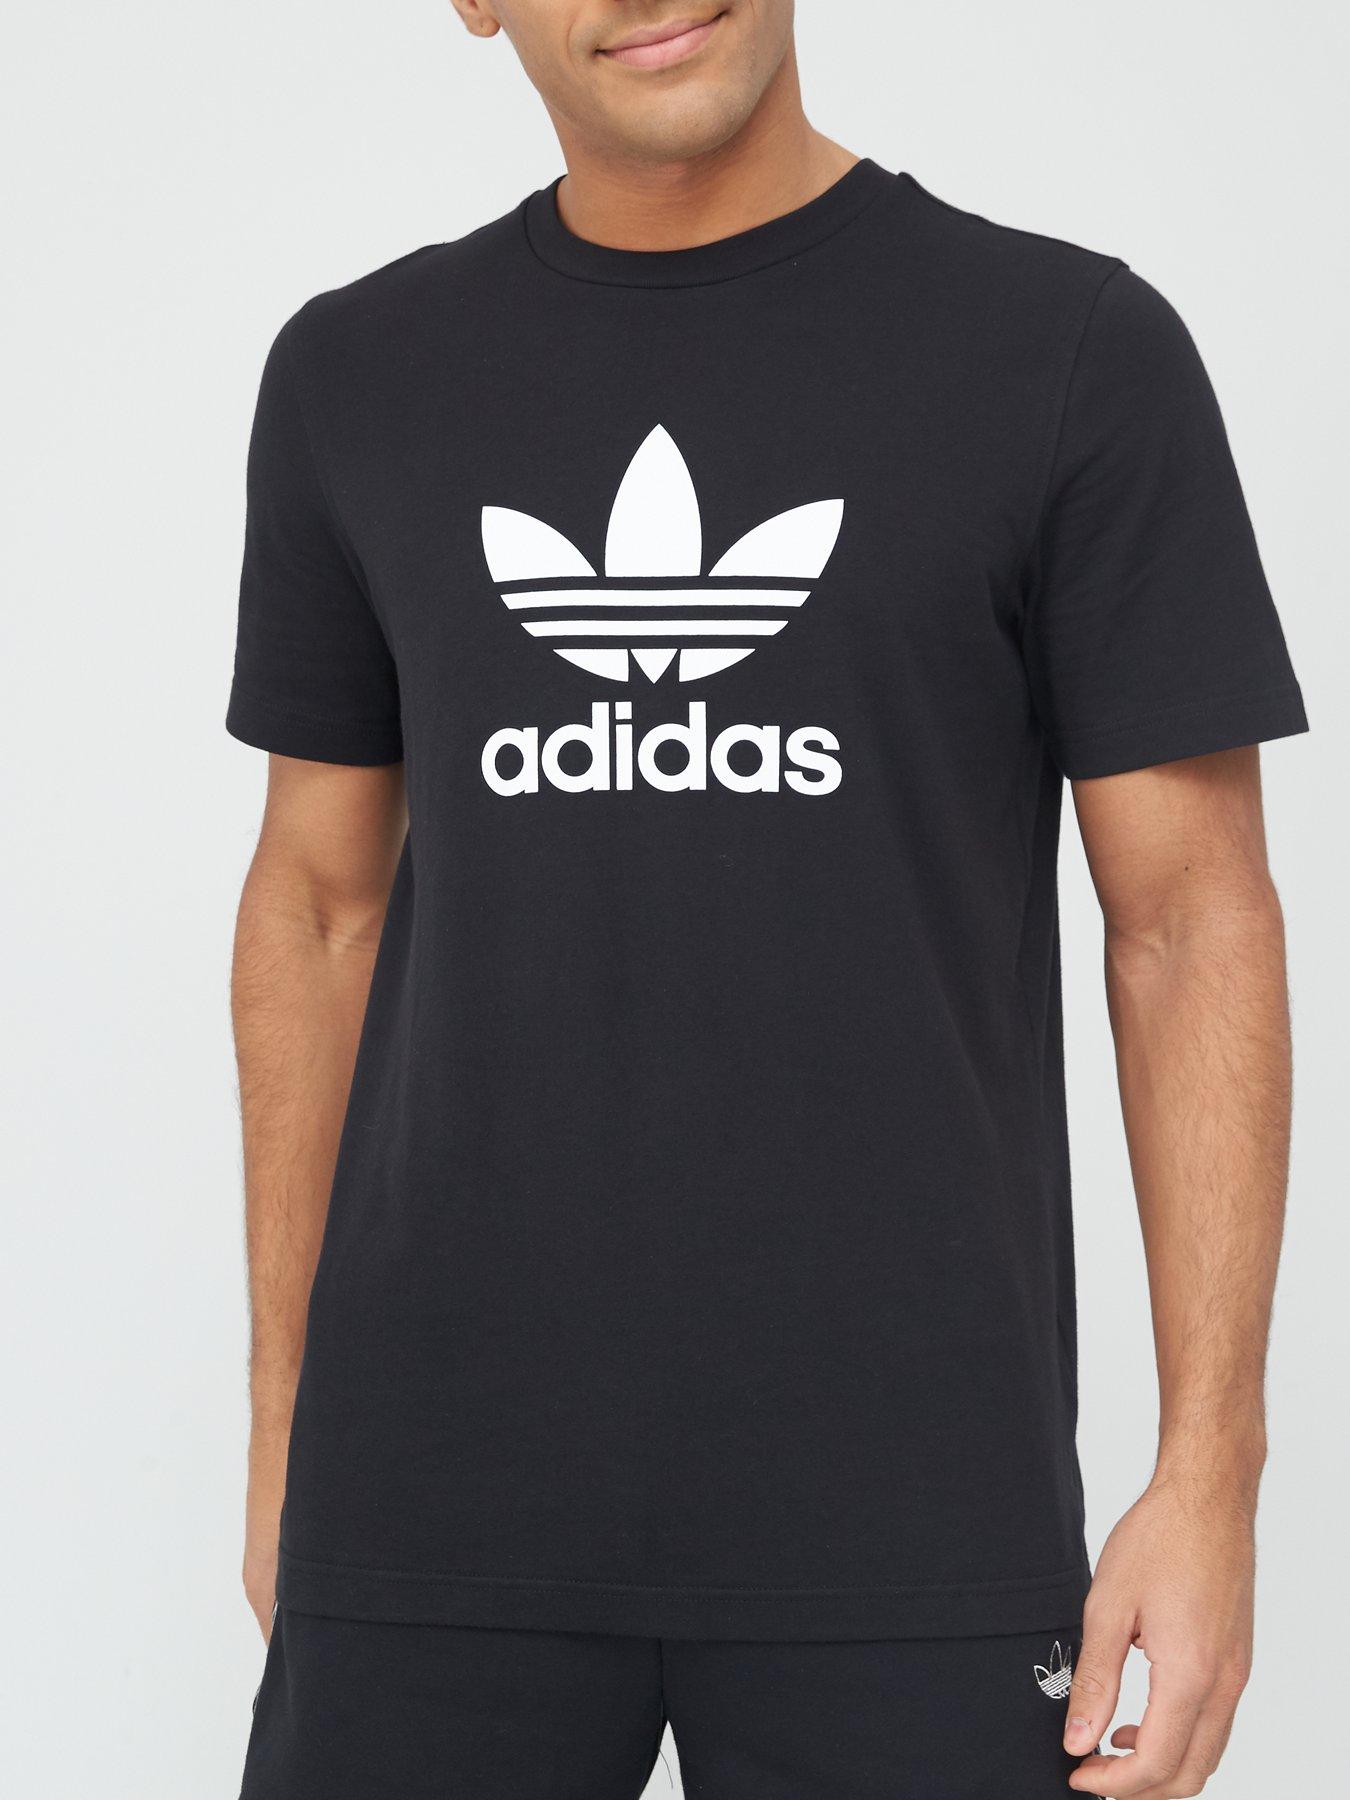 adidas original t shirts in uk